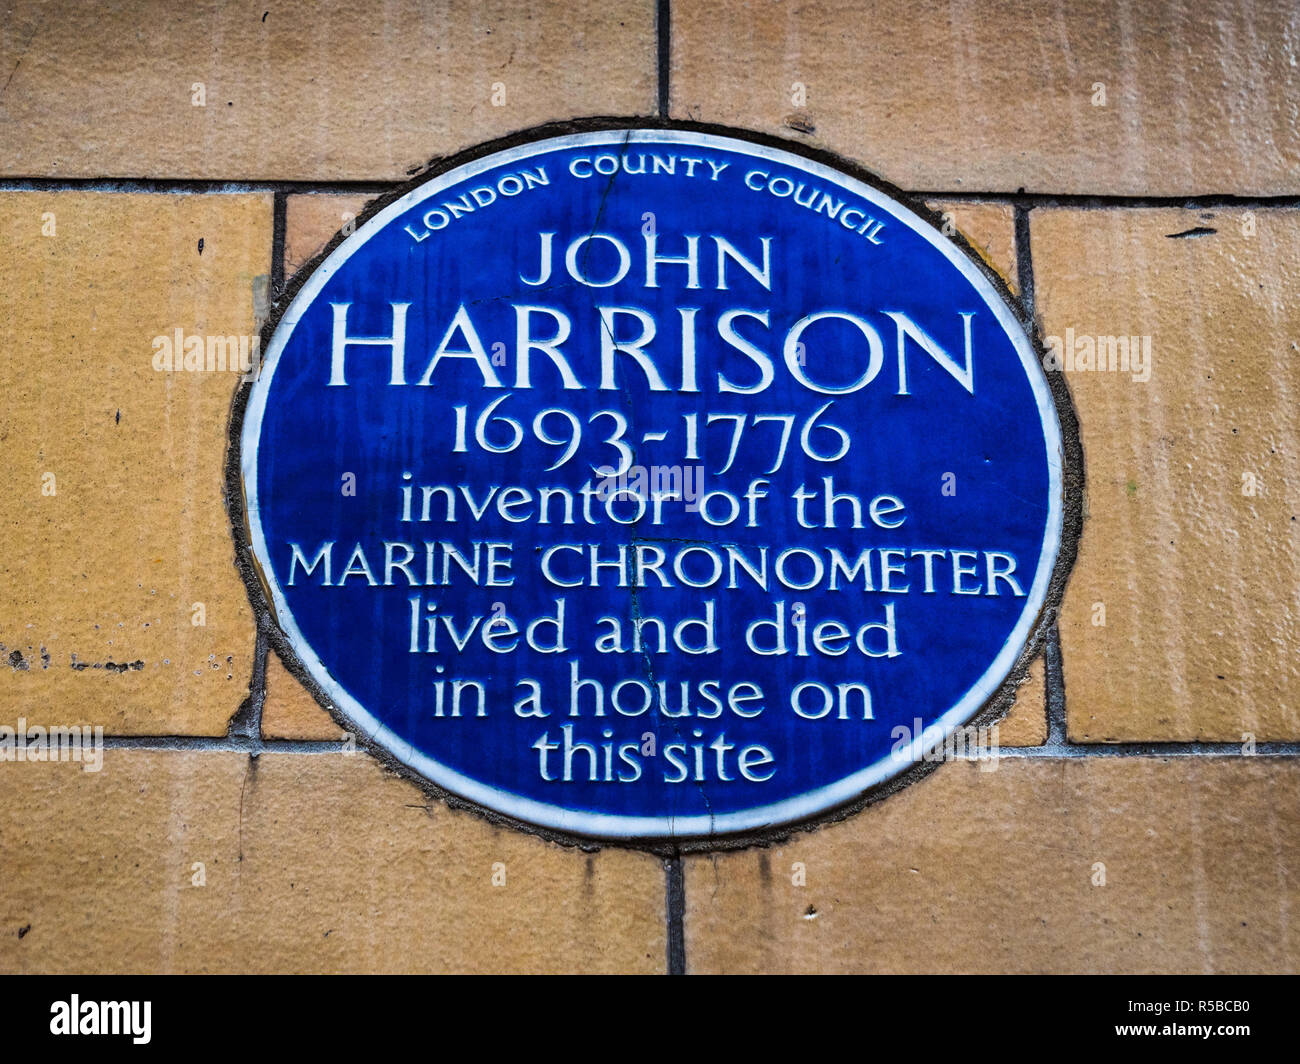 John Harrison Blue Plaque London - John Harrison ha inventato il cronometro marino. Targa sulla sua casa in Summit House, Red Lion Square, Holborn London Foto Stock